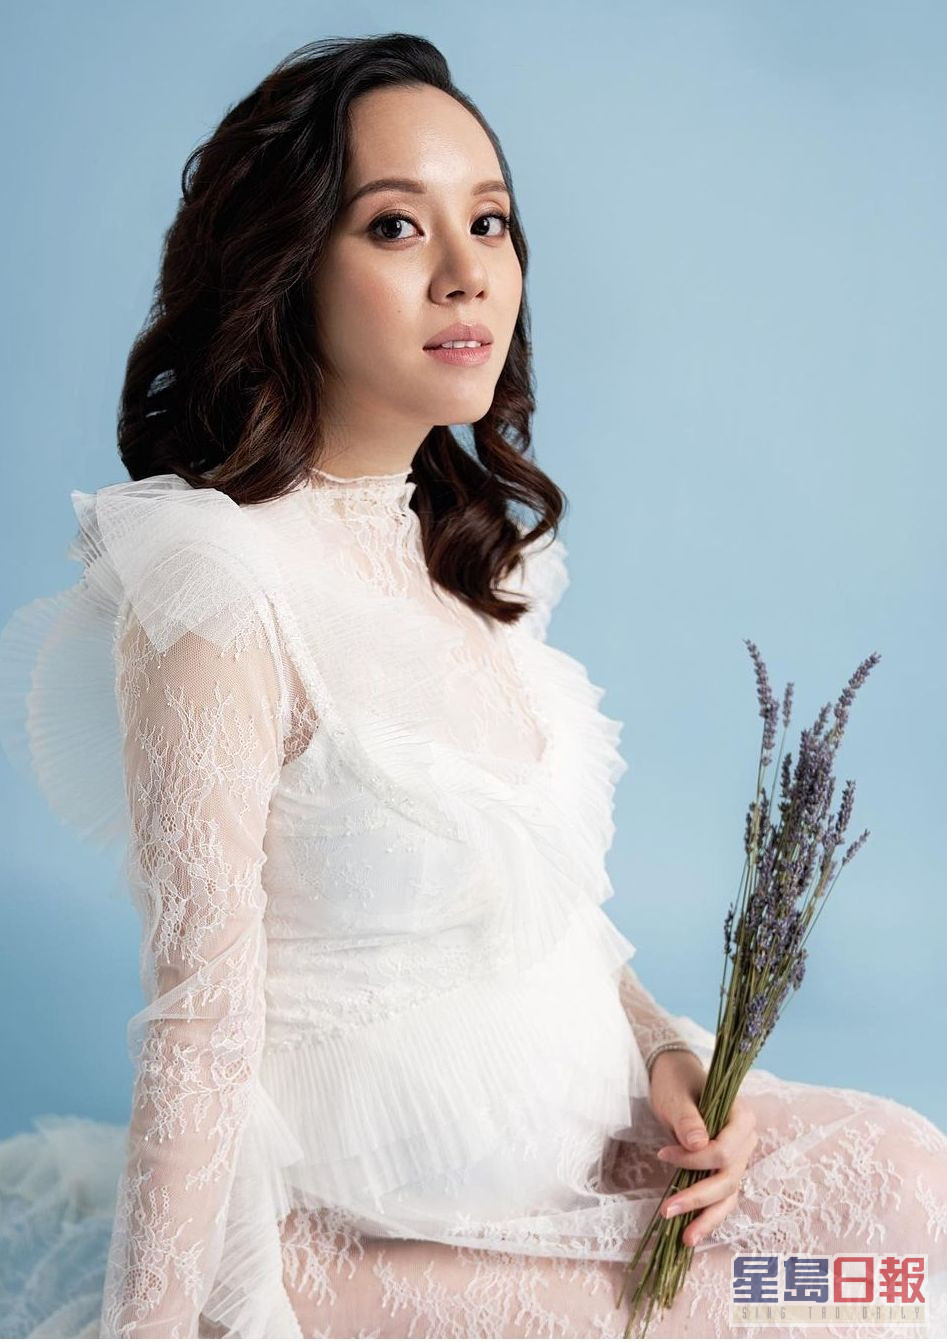 Jessica喺社交網報喜宣布B女已經出生！